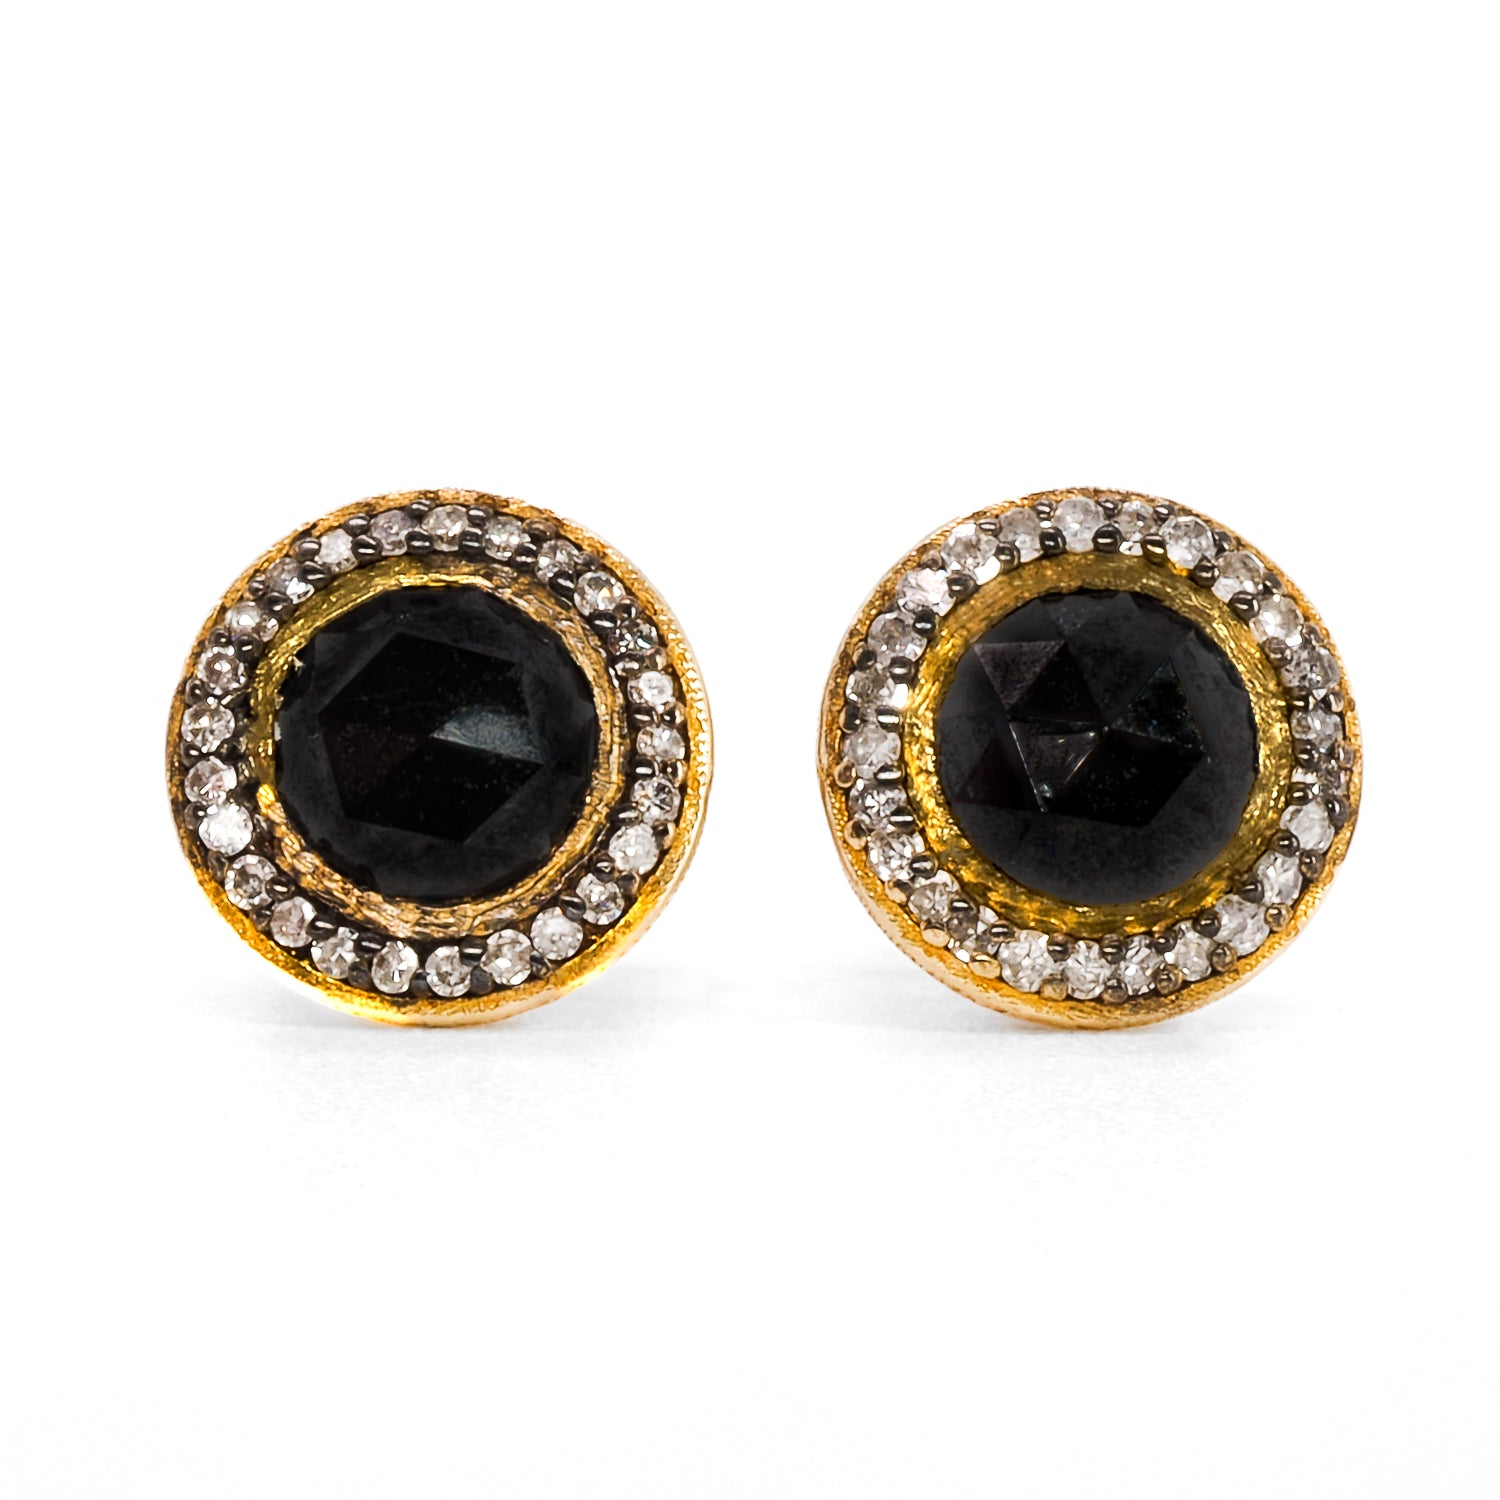 The Mini Black Rose Cut Stud Earrings, a stunning pair of handmade earrings featuring black diamonds set in 14K yellow gold.